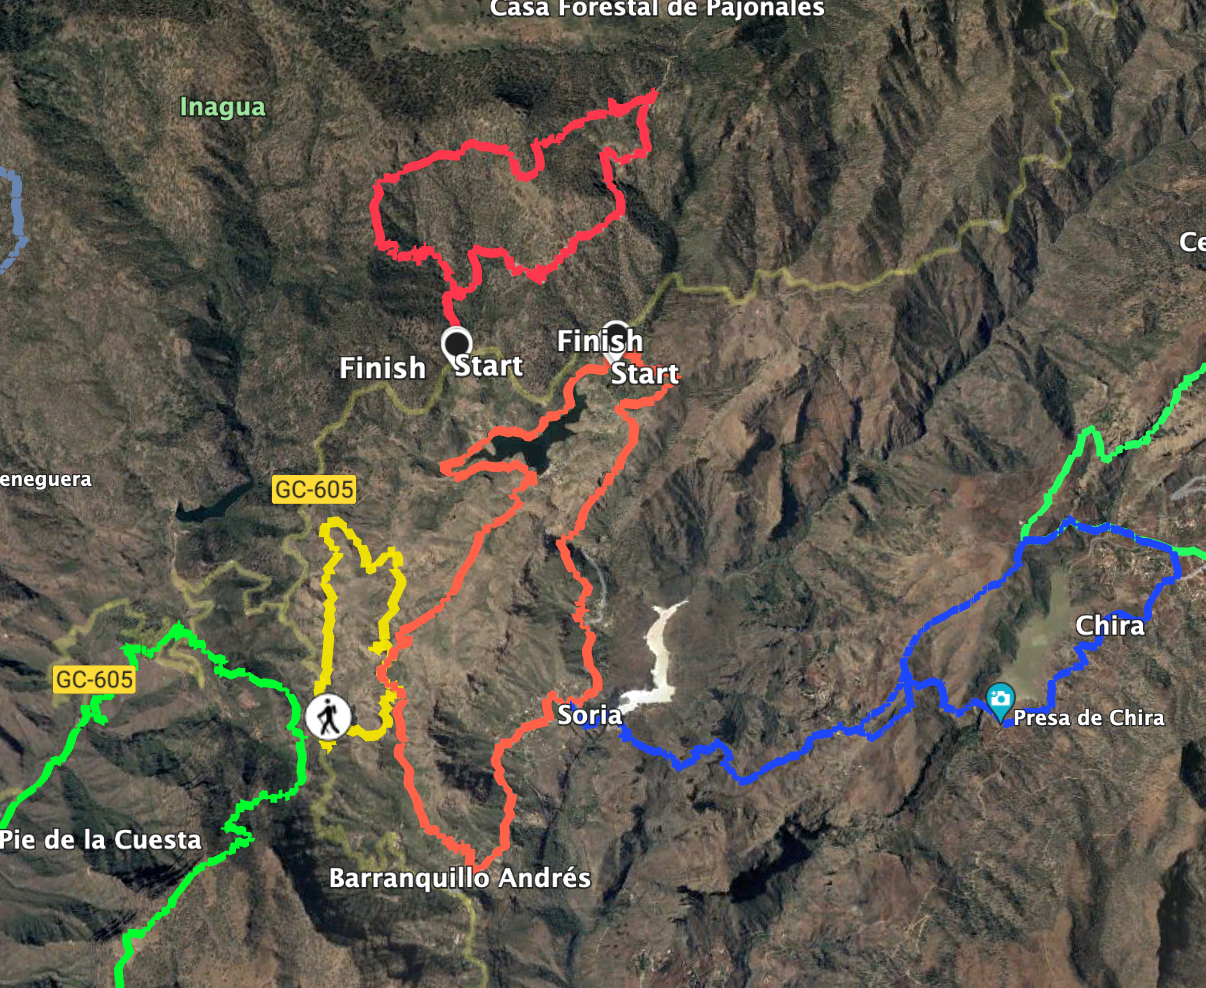 Track of the Presa de Las Niñas hike (red above) and neighbouring hikes